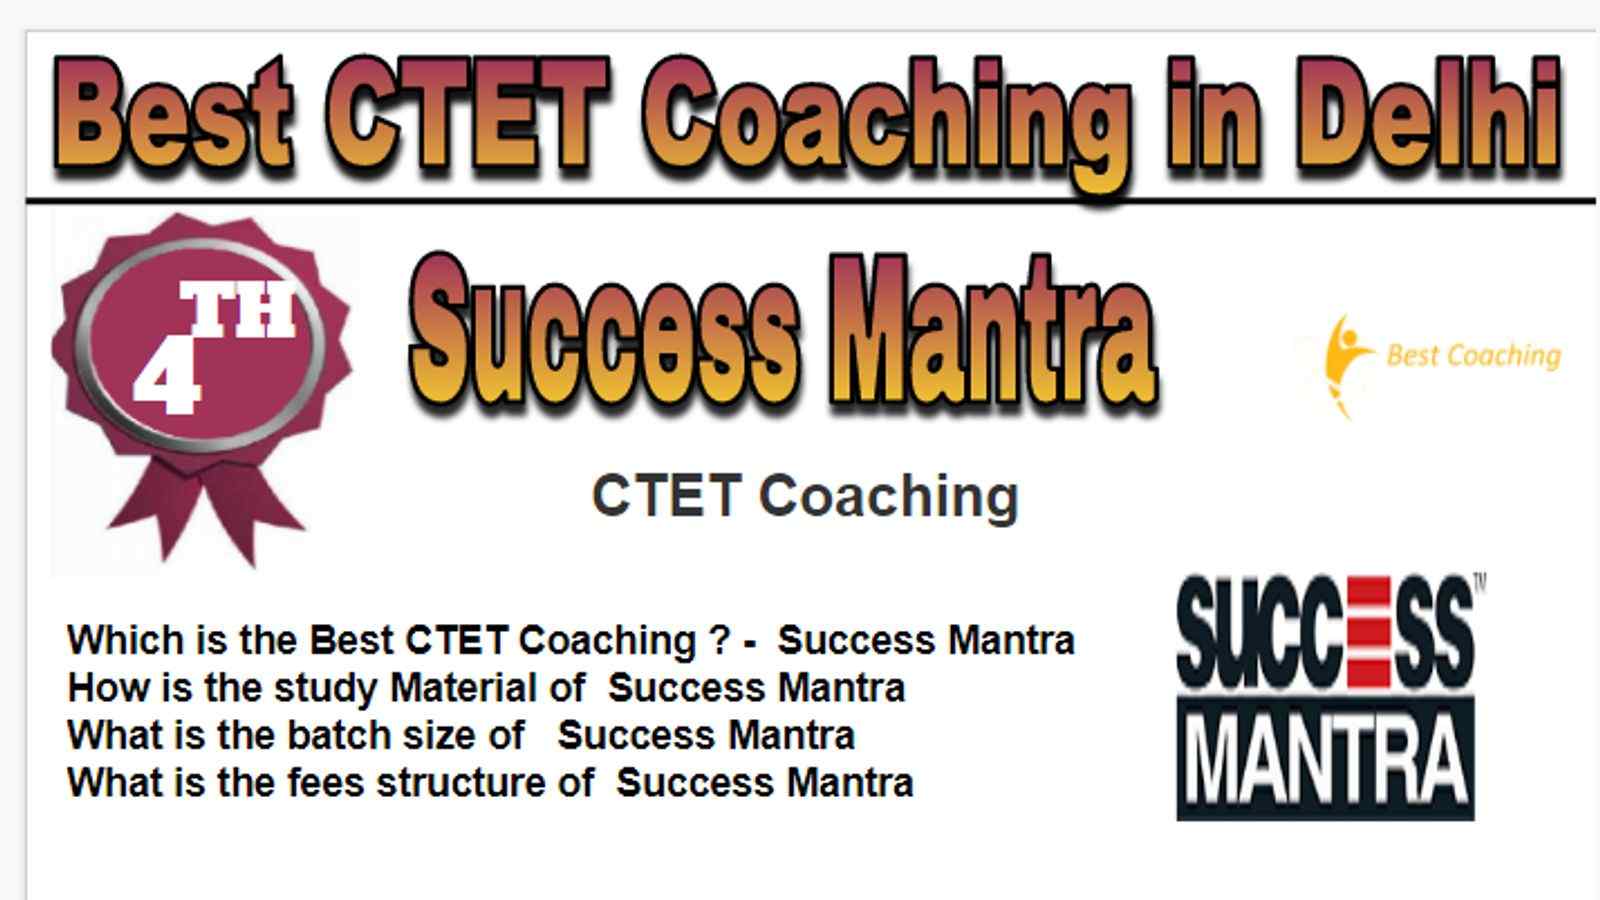 Rank 4 Best CTET Coaching in Delhi